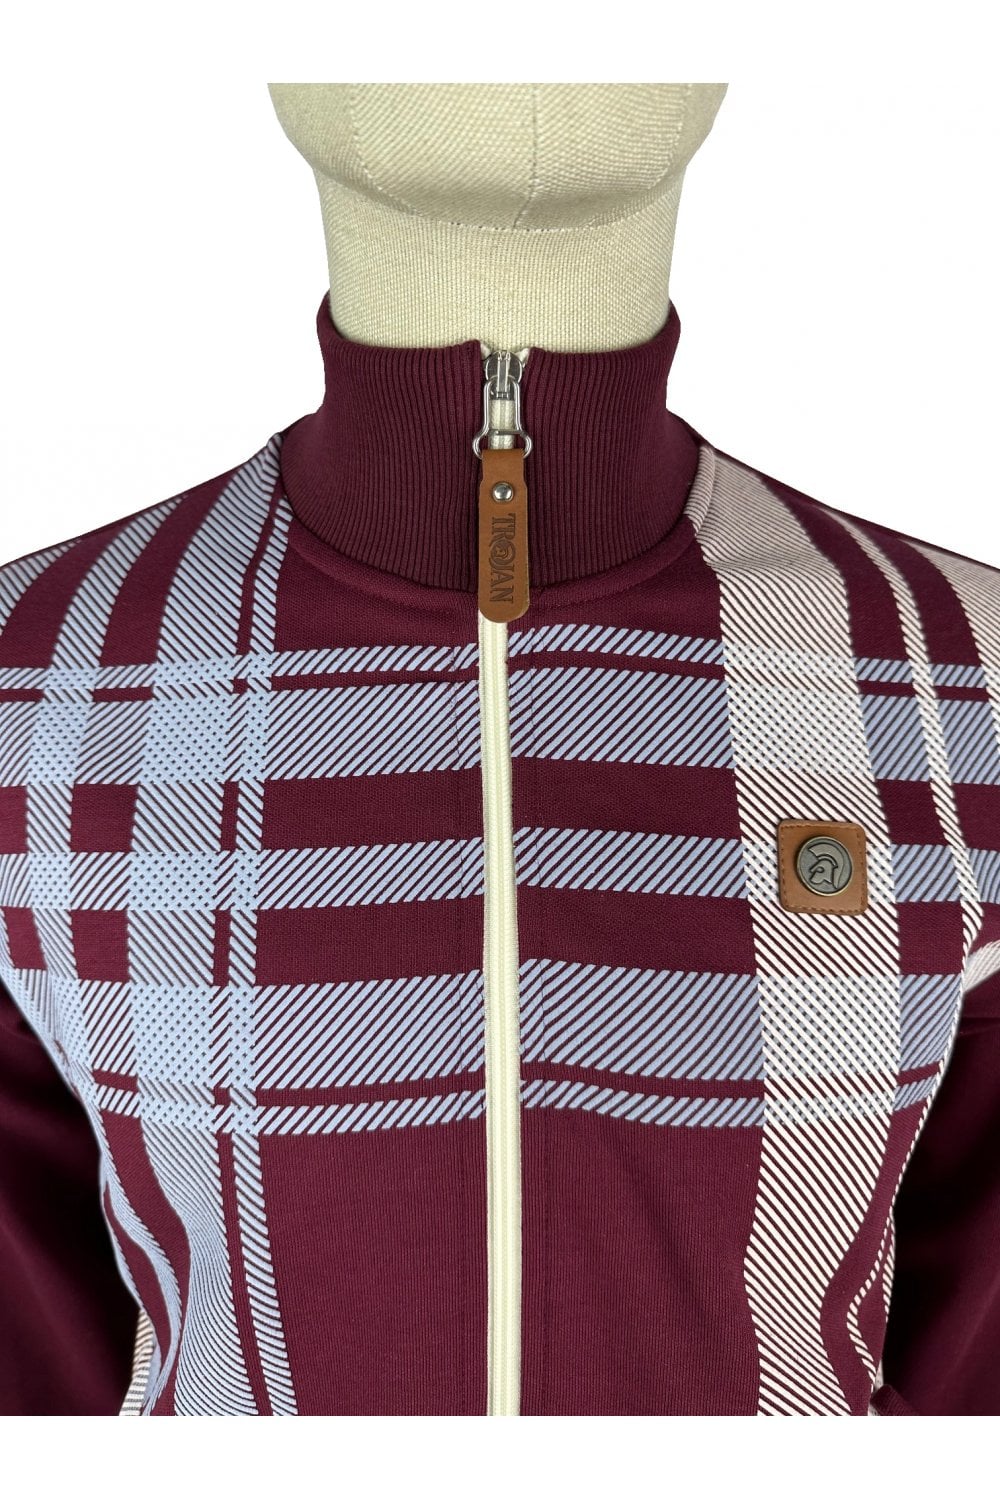 TROJAN Oversize Check Track Top Jacket TR/8850 Port - Raw Menswear